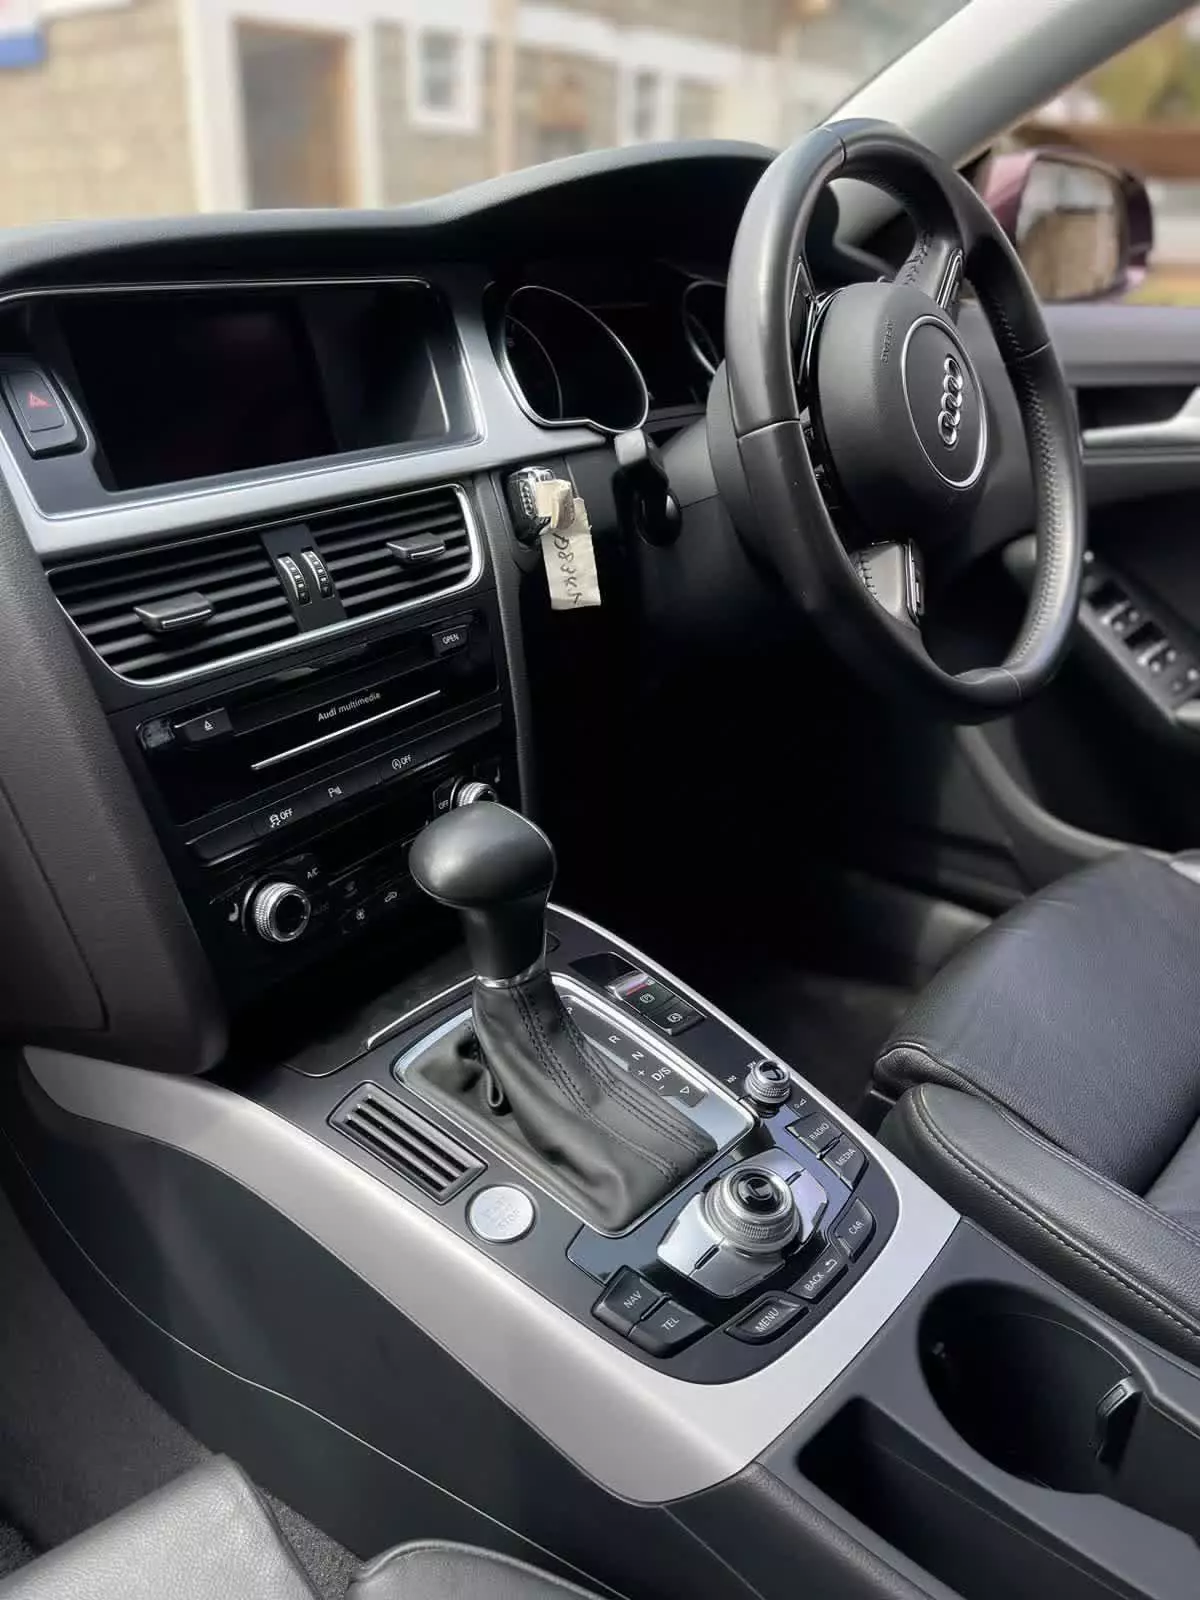 Audi A5 - 2016